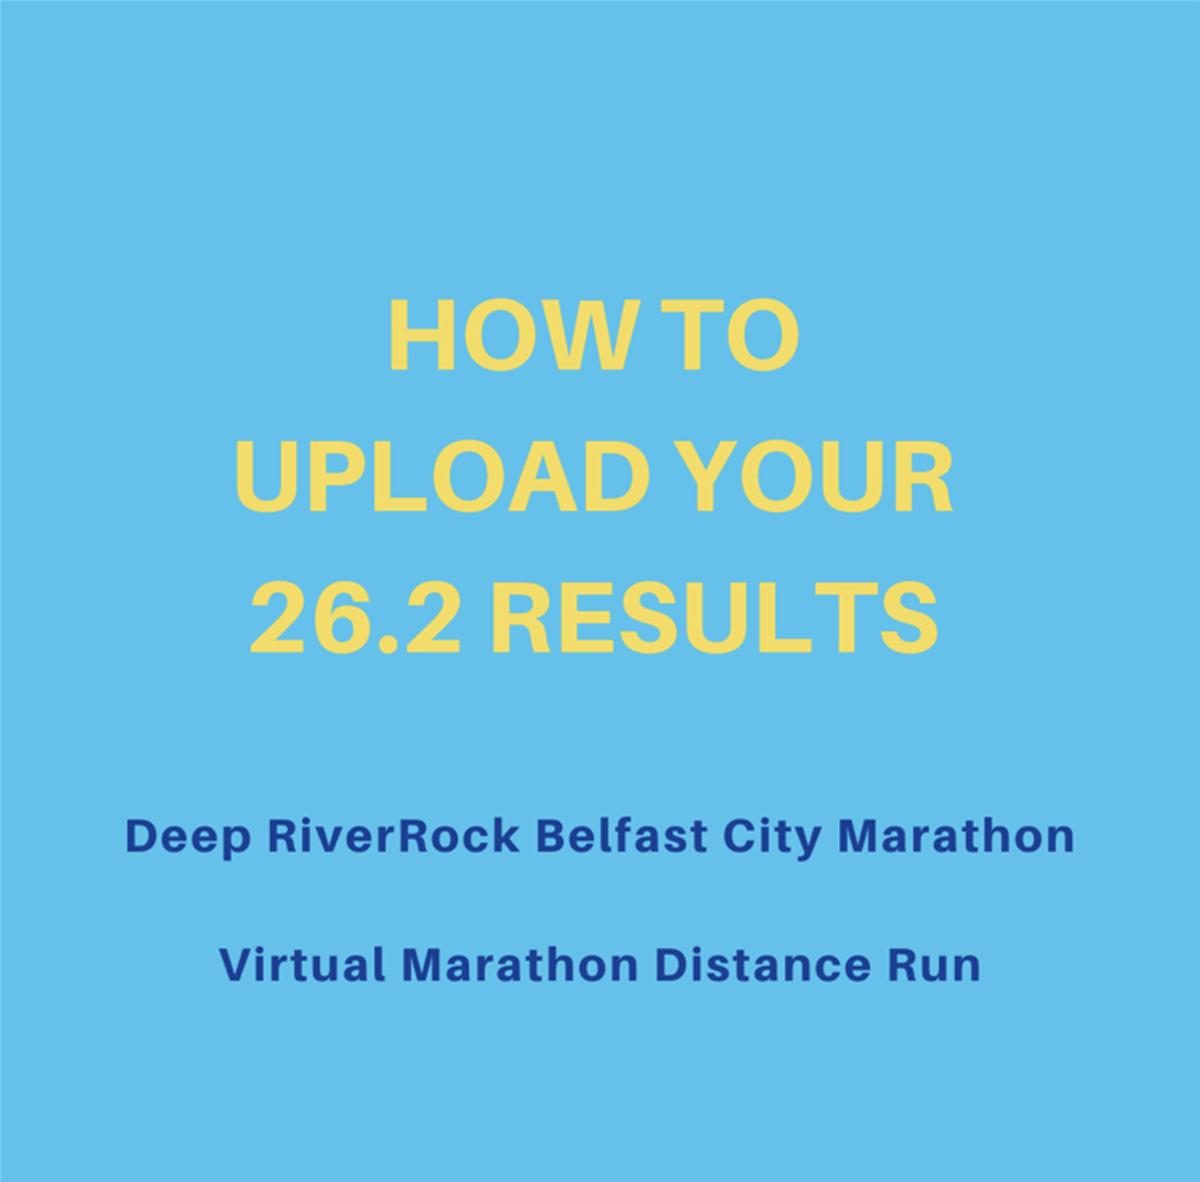 Virtual Marathon Distance Run Results Upload